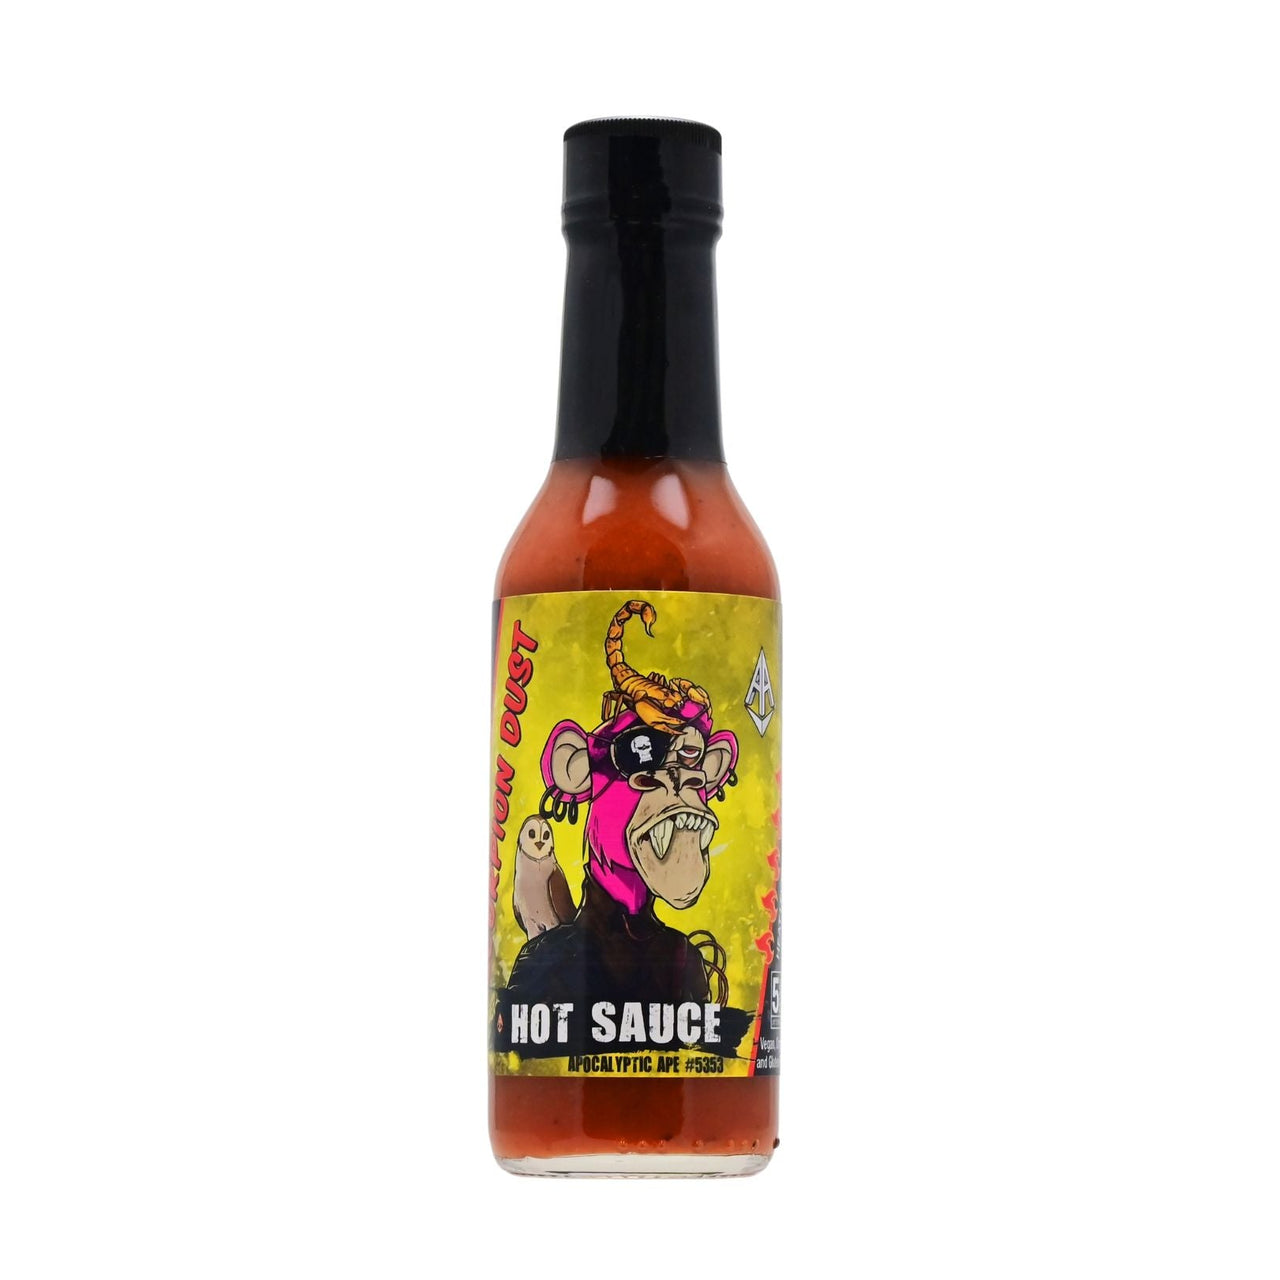 Apocalyptic Ape #5353 Scorpion Dust Hot Sauce